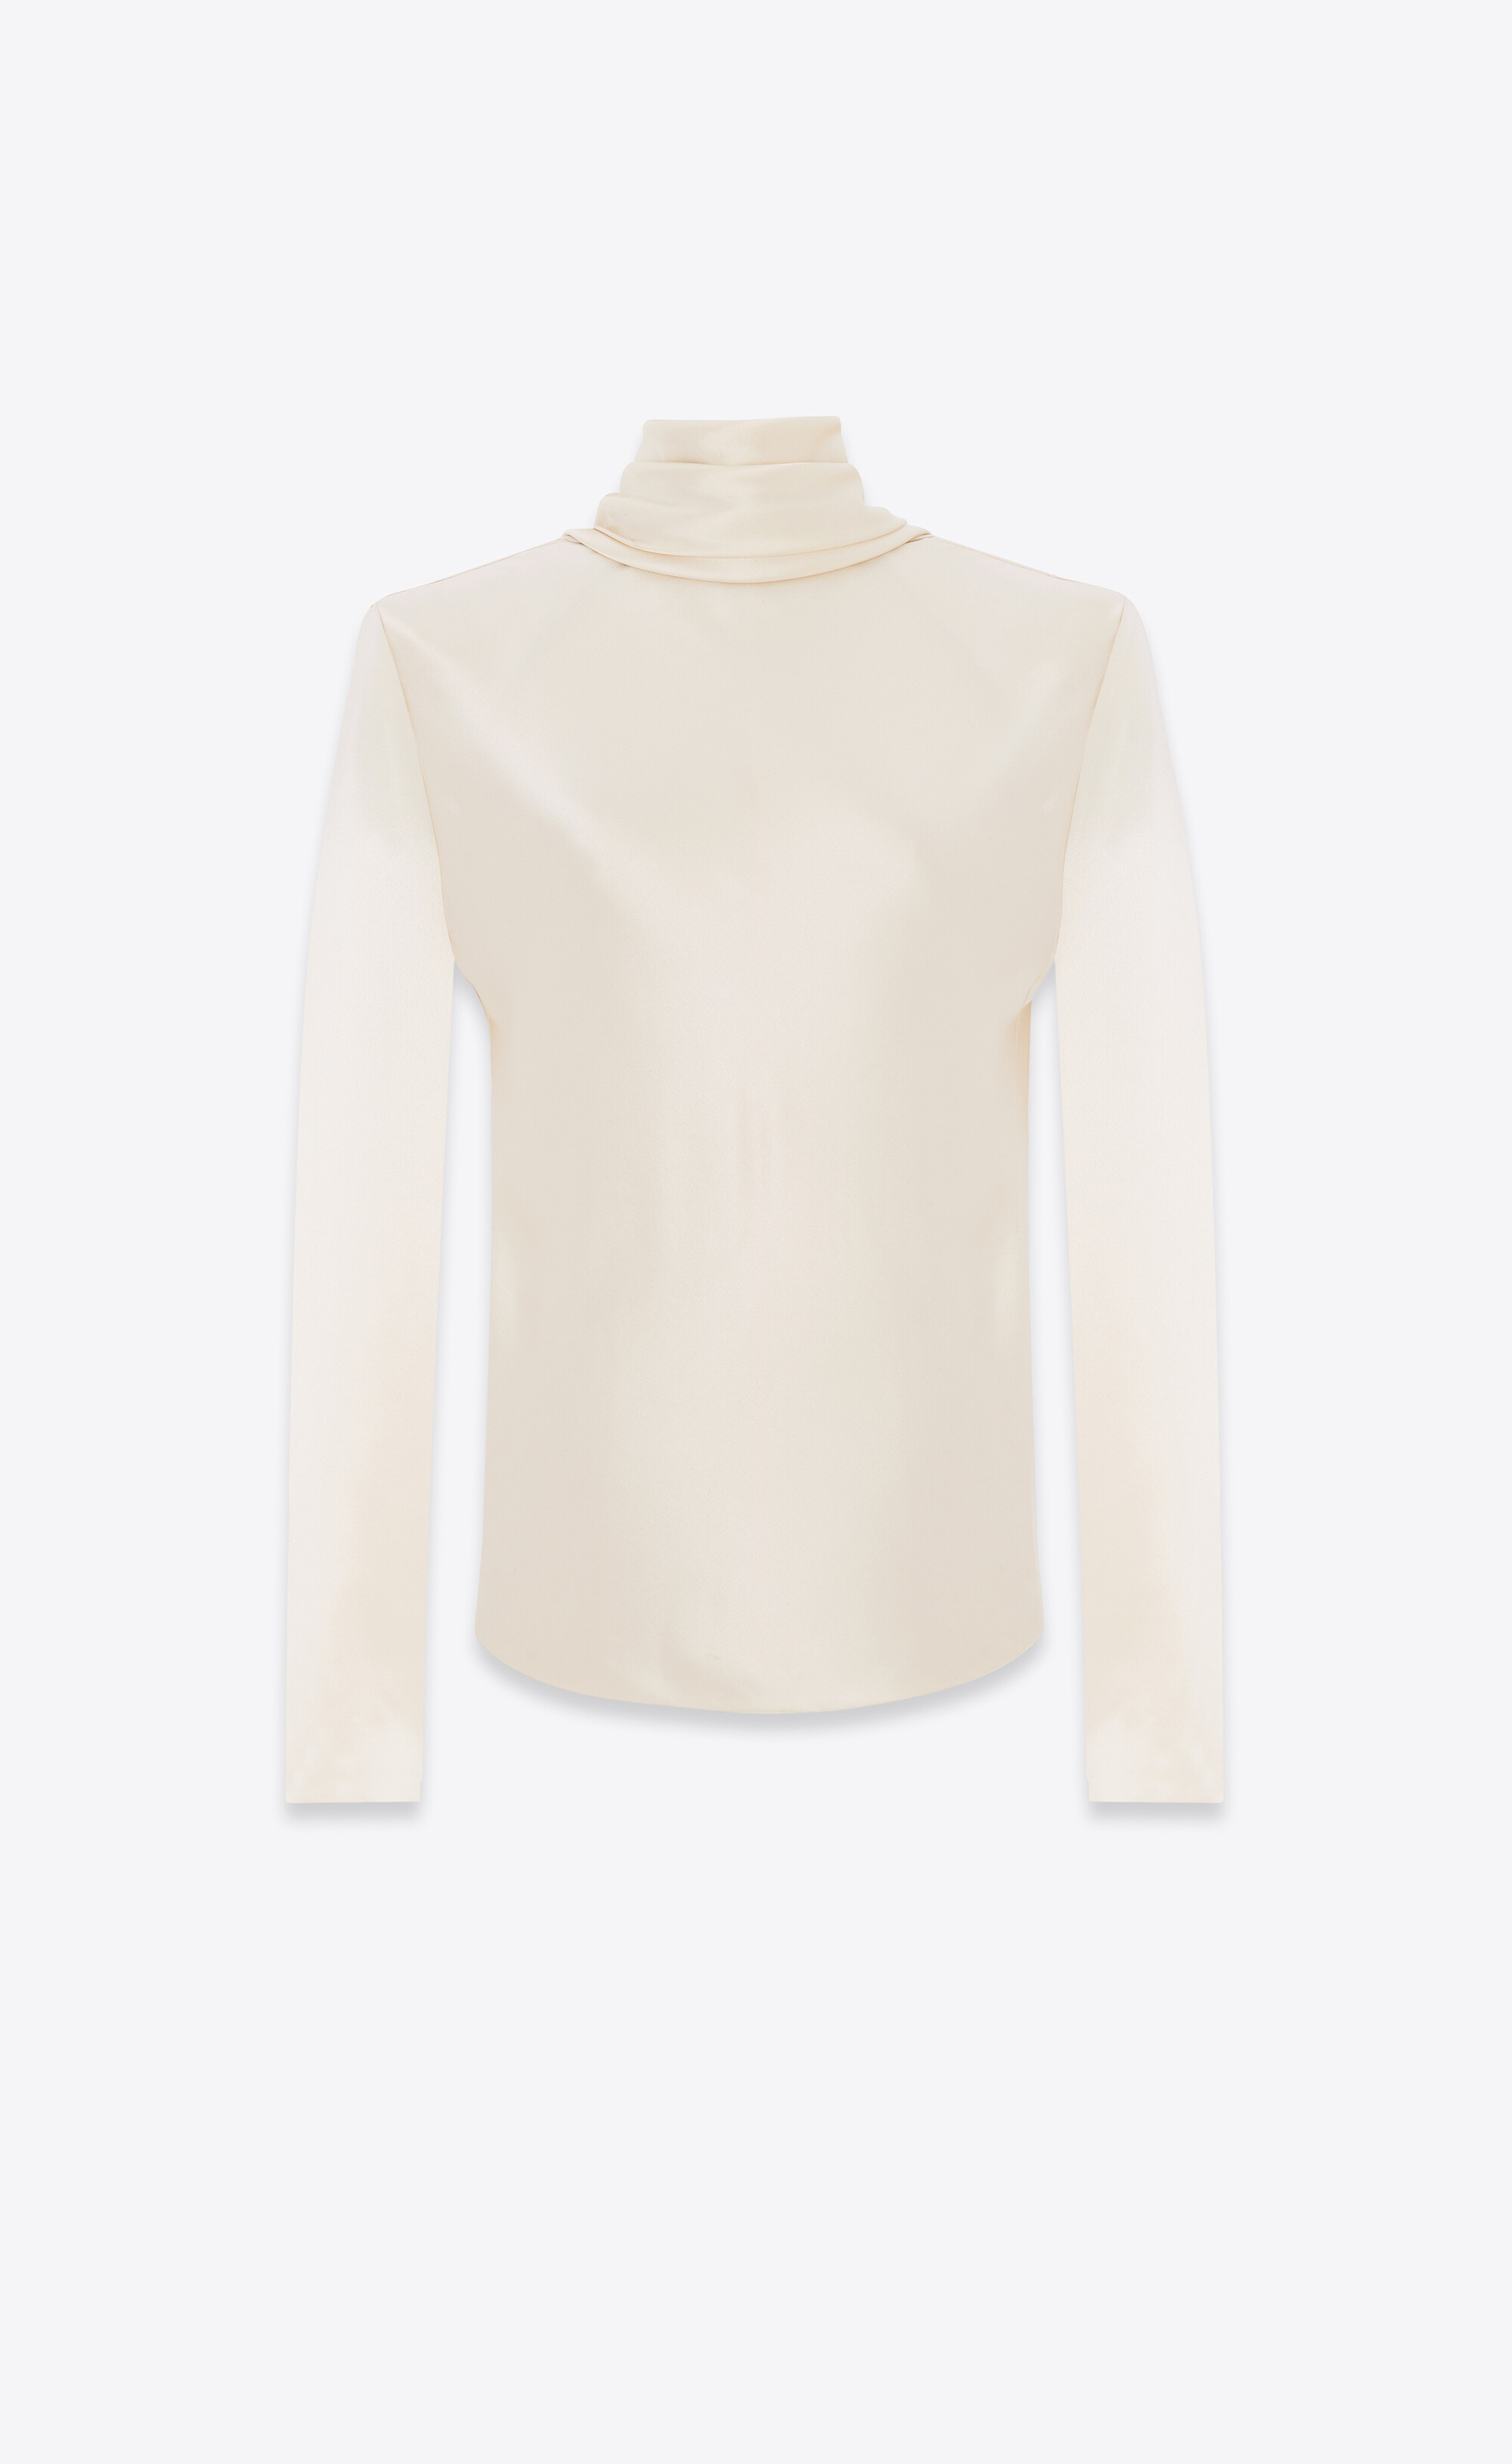 Cowl-back blouse in silk satin crepe, Saint Laurent